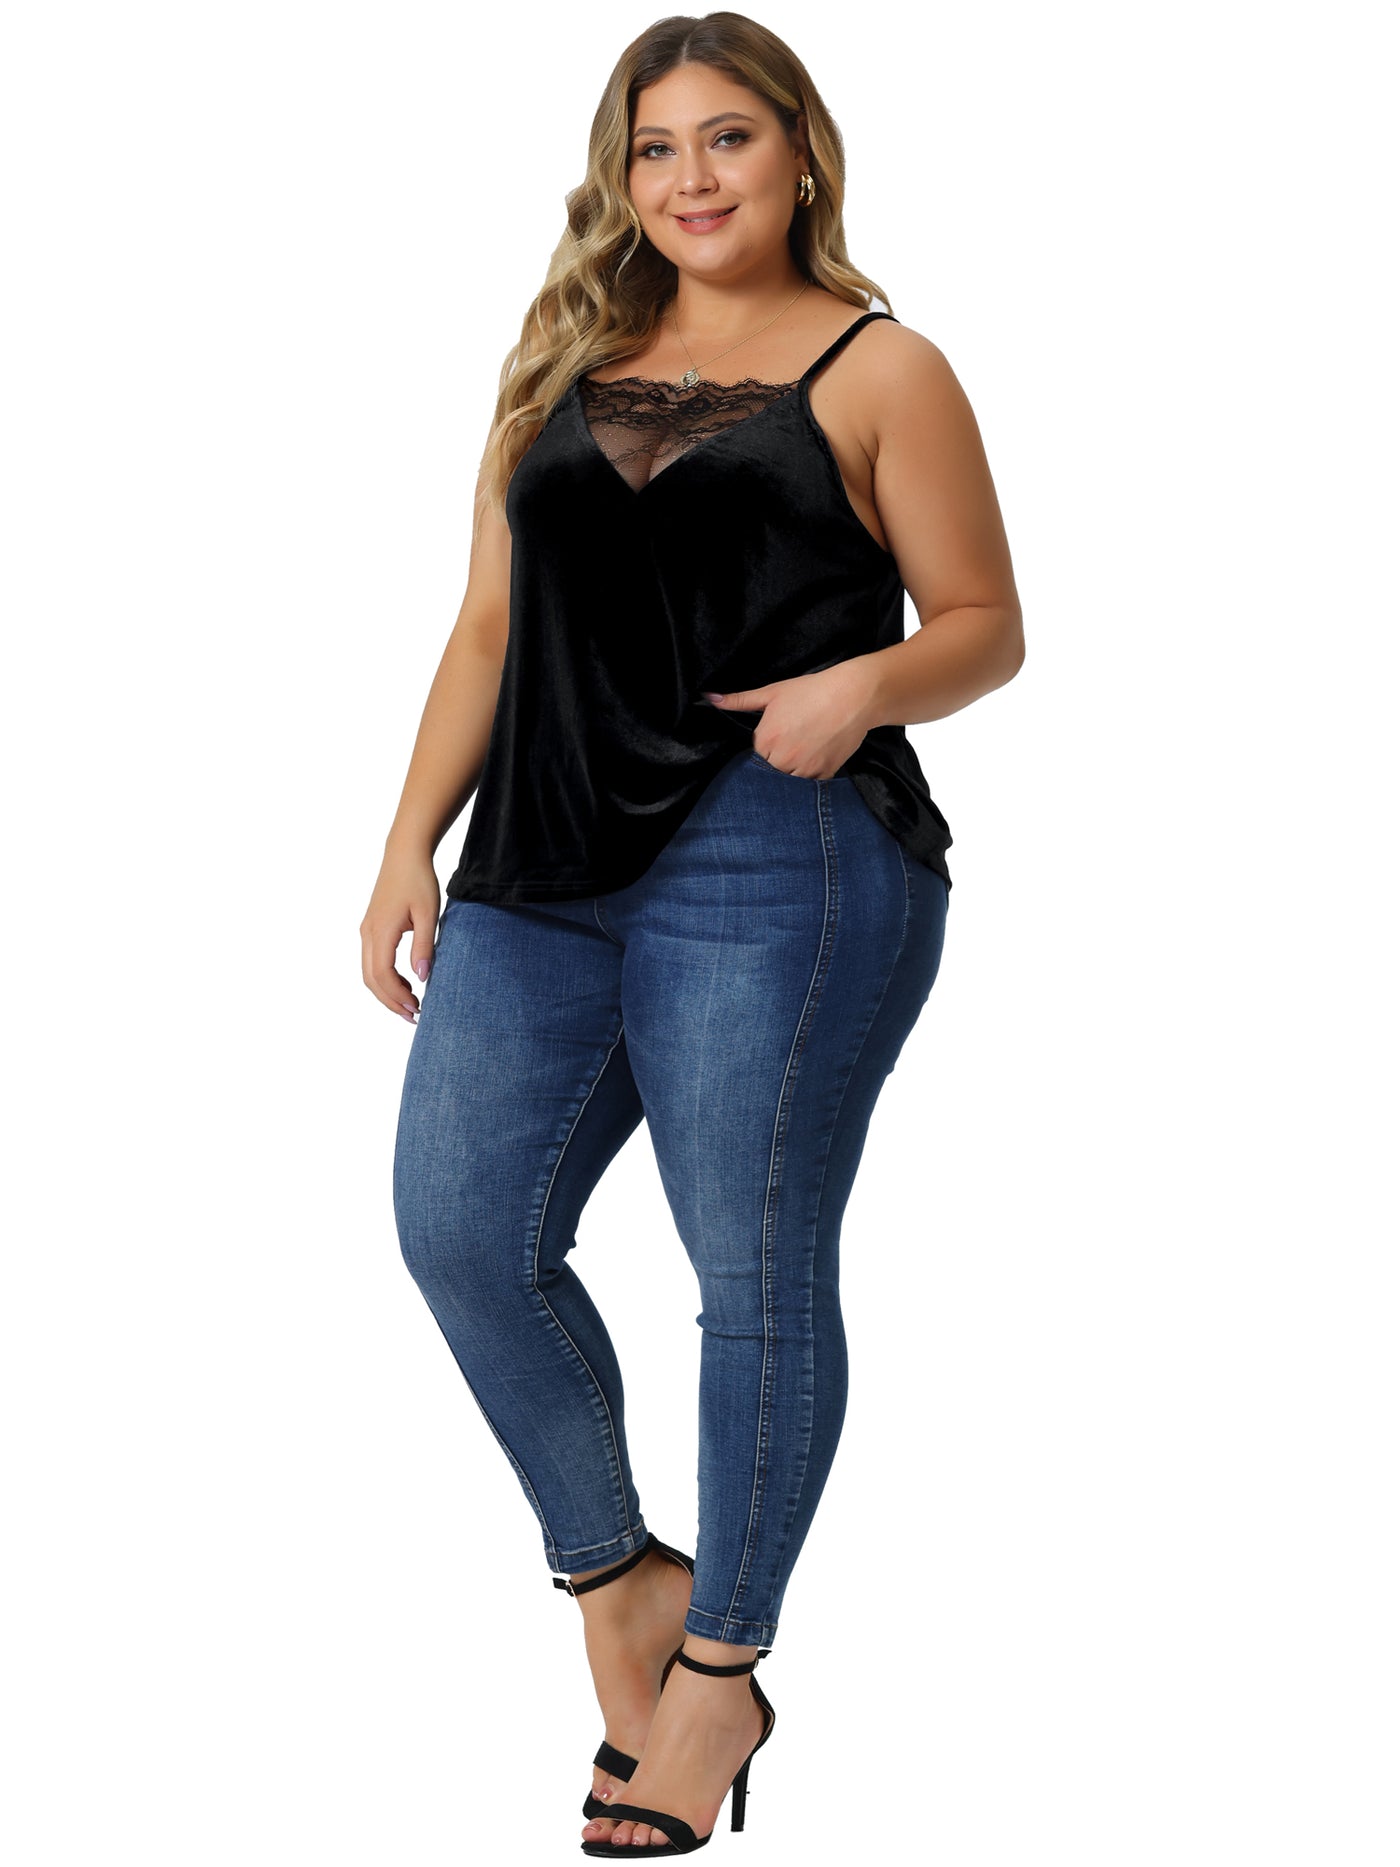 Bublédon Velvet Camisole for Women Plus Size Adjustable Strap Lace Sleeveless Cami Tank Tops